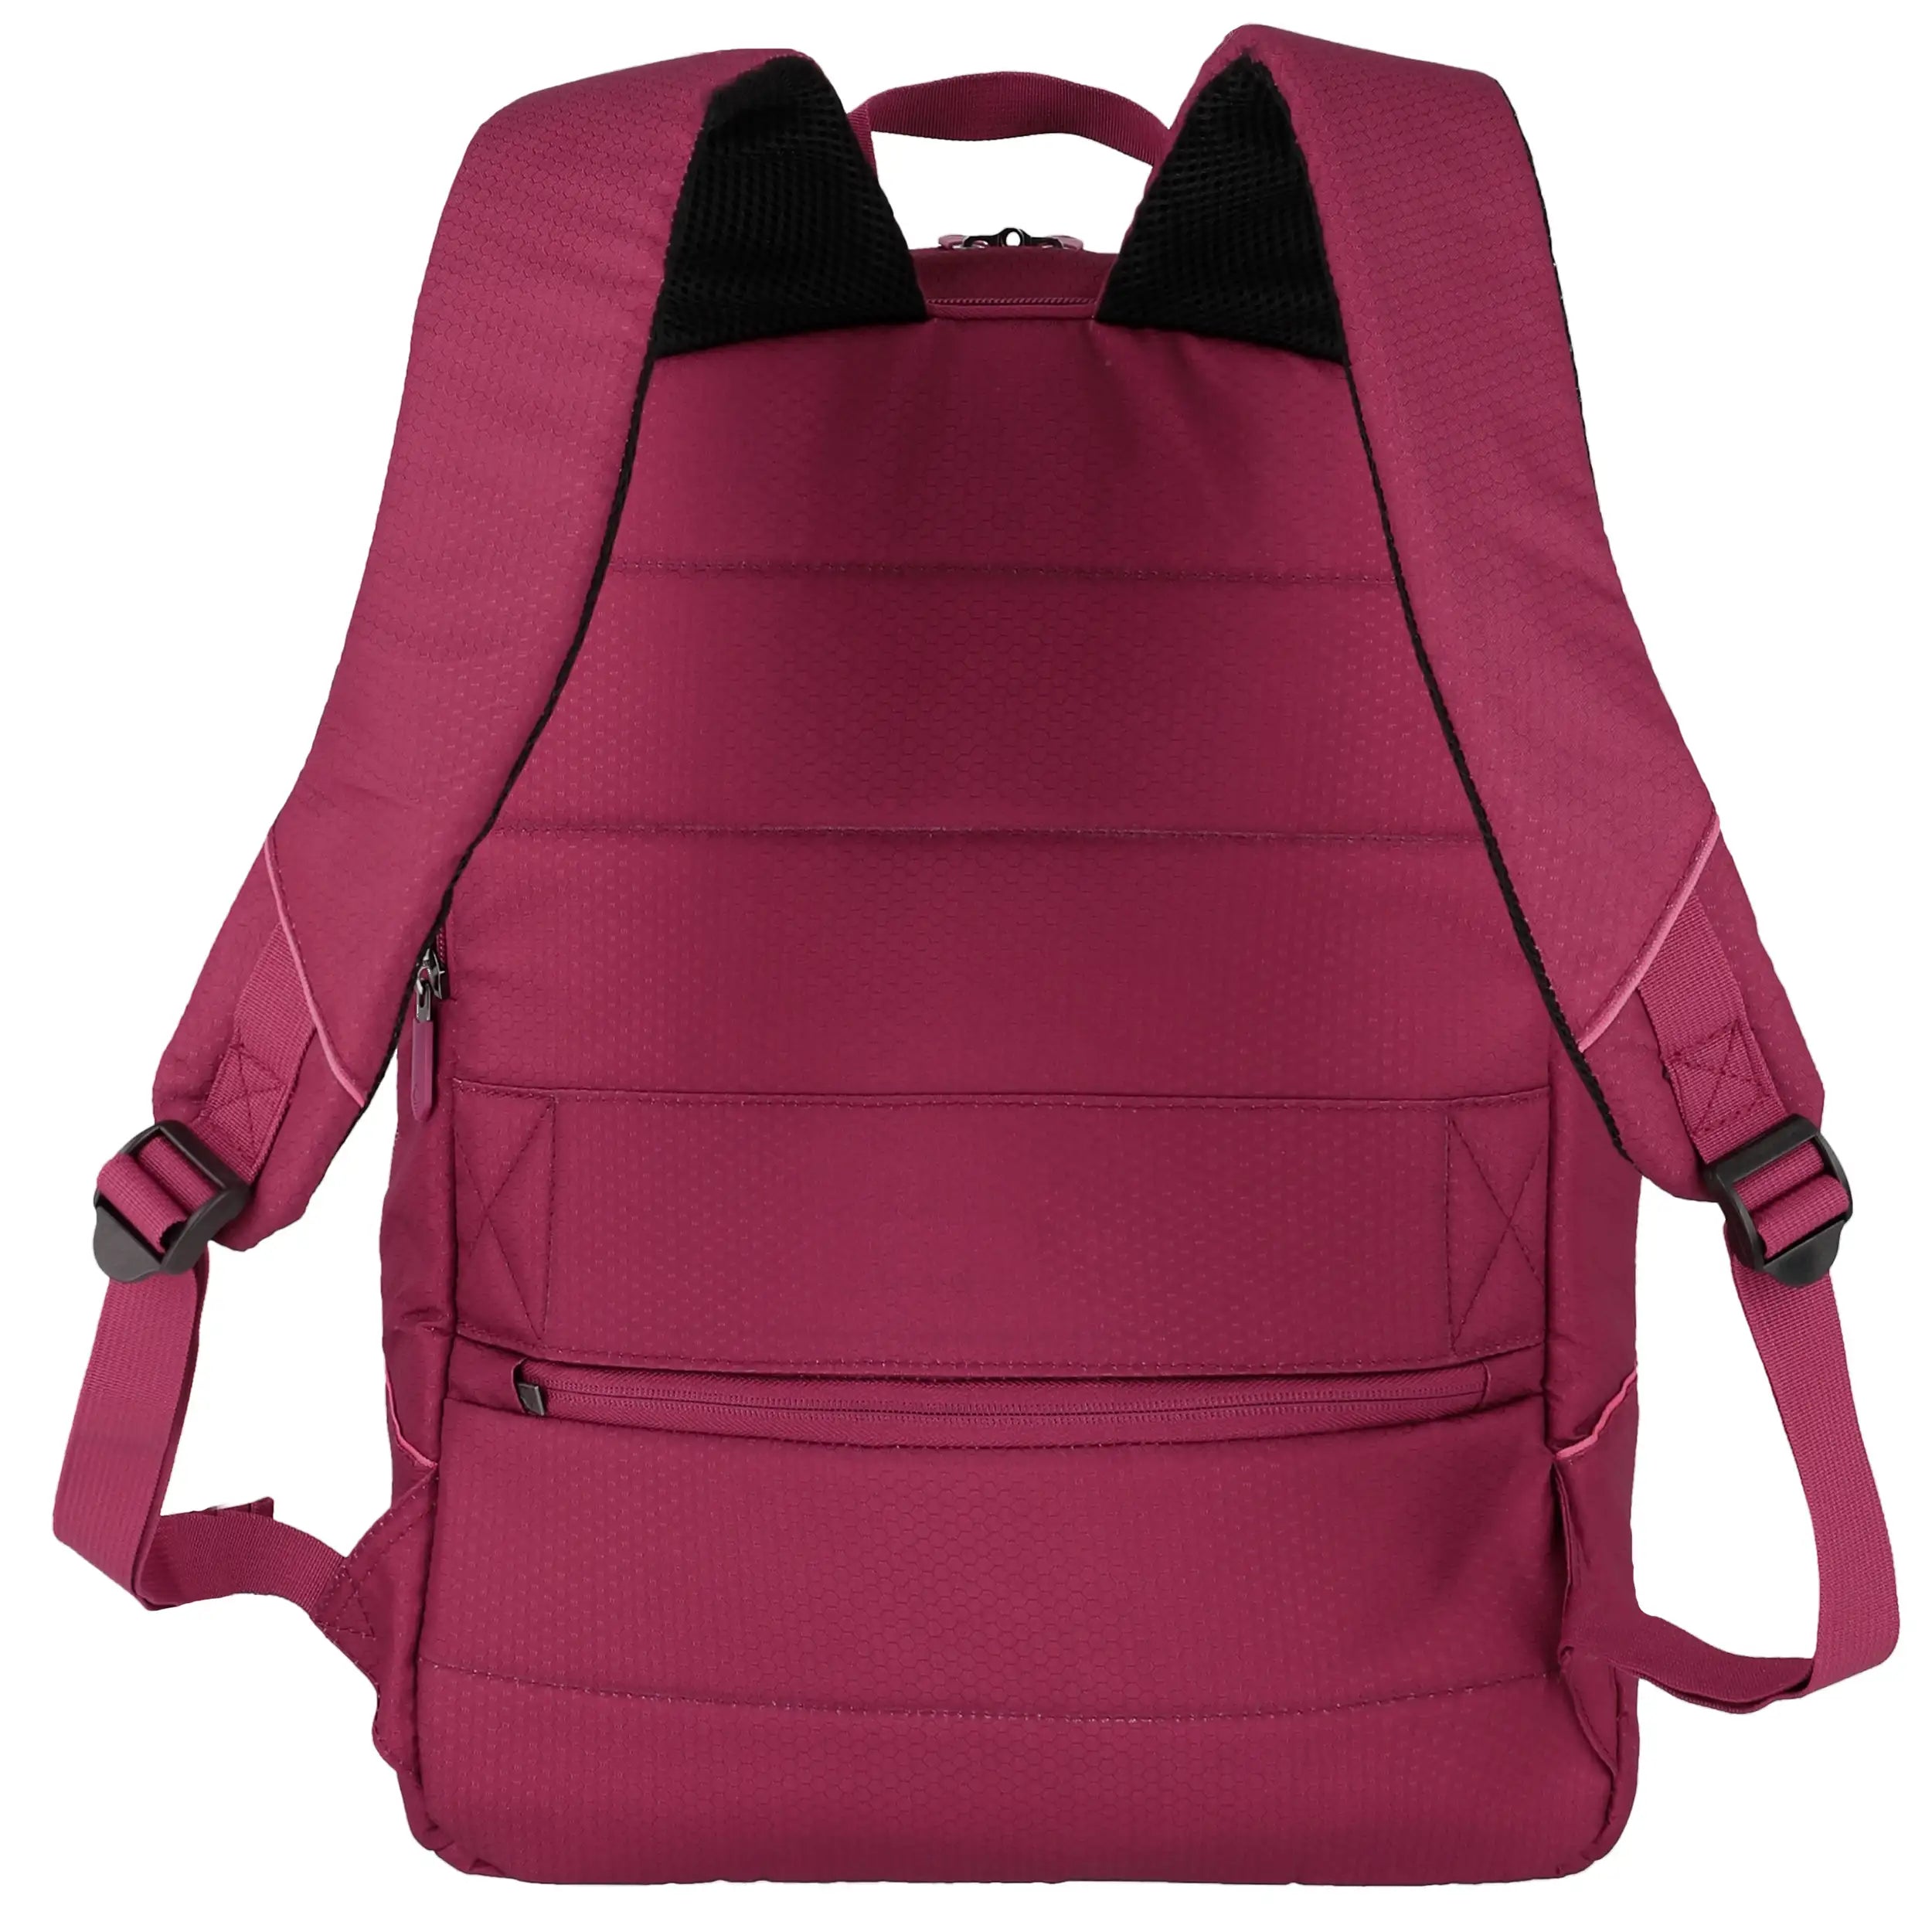 Travelite Skaii backpack 44 cm - evening red